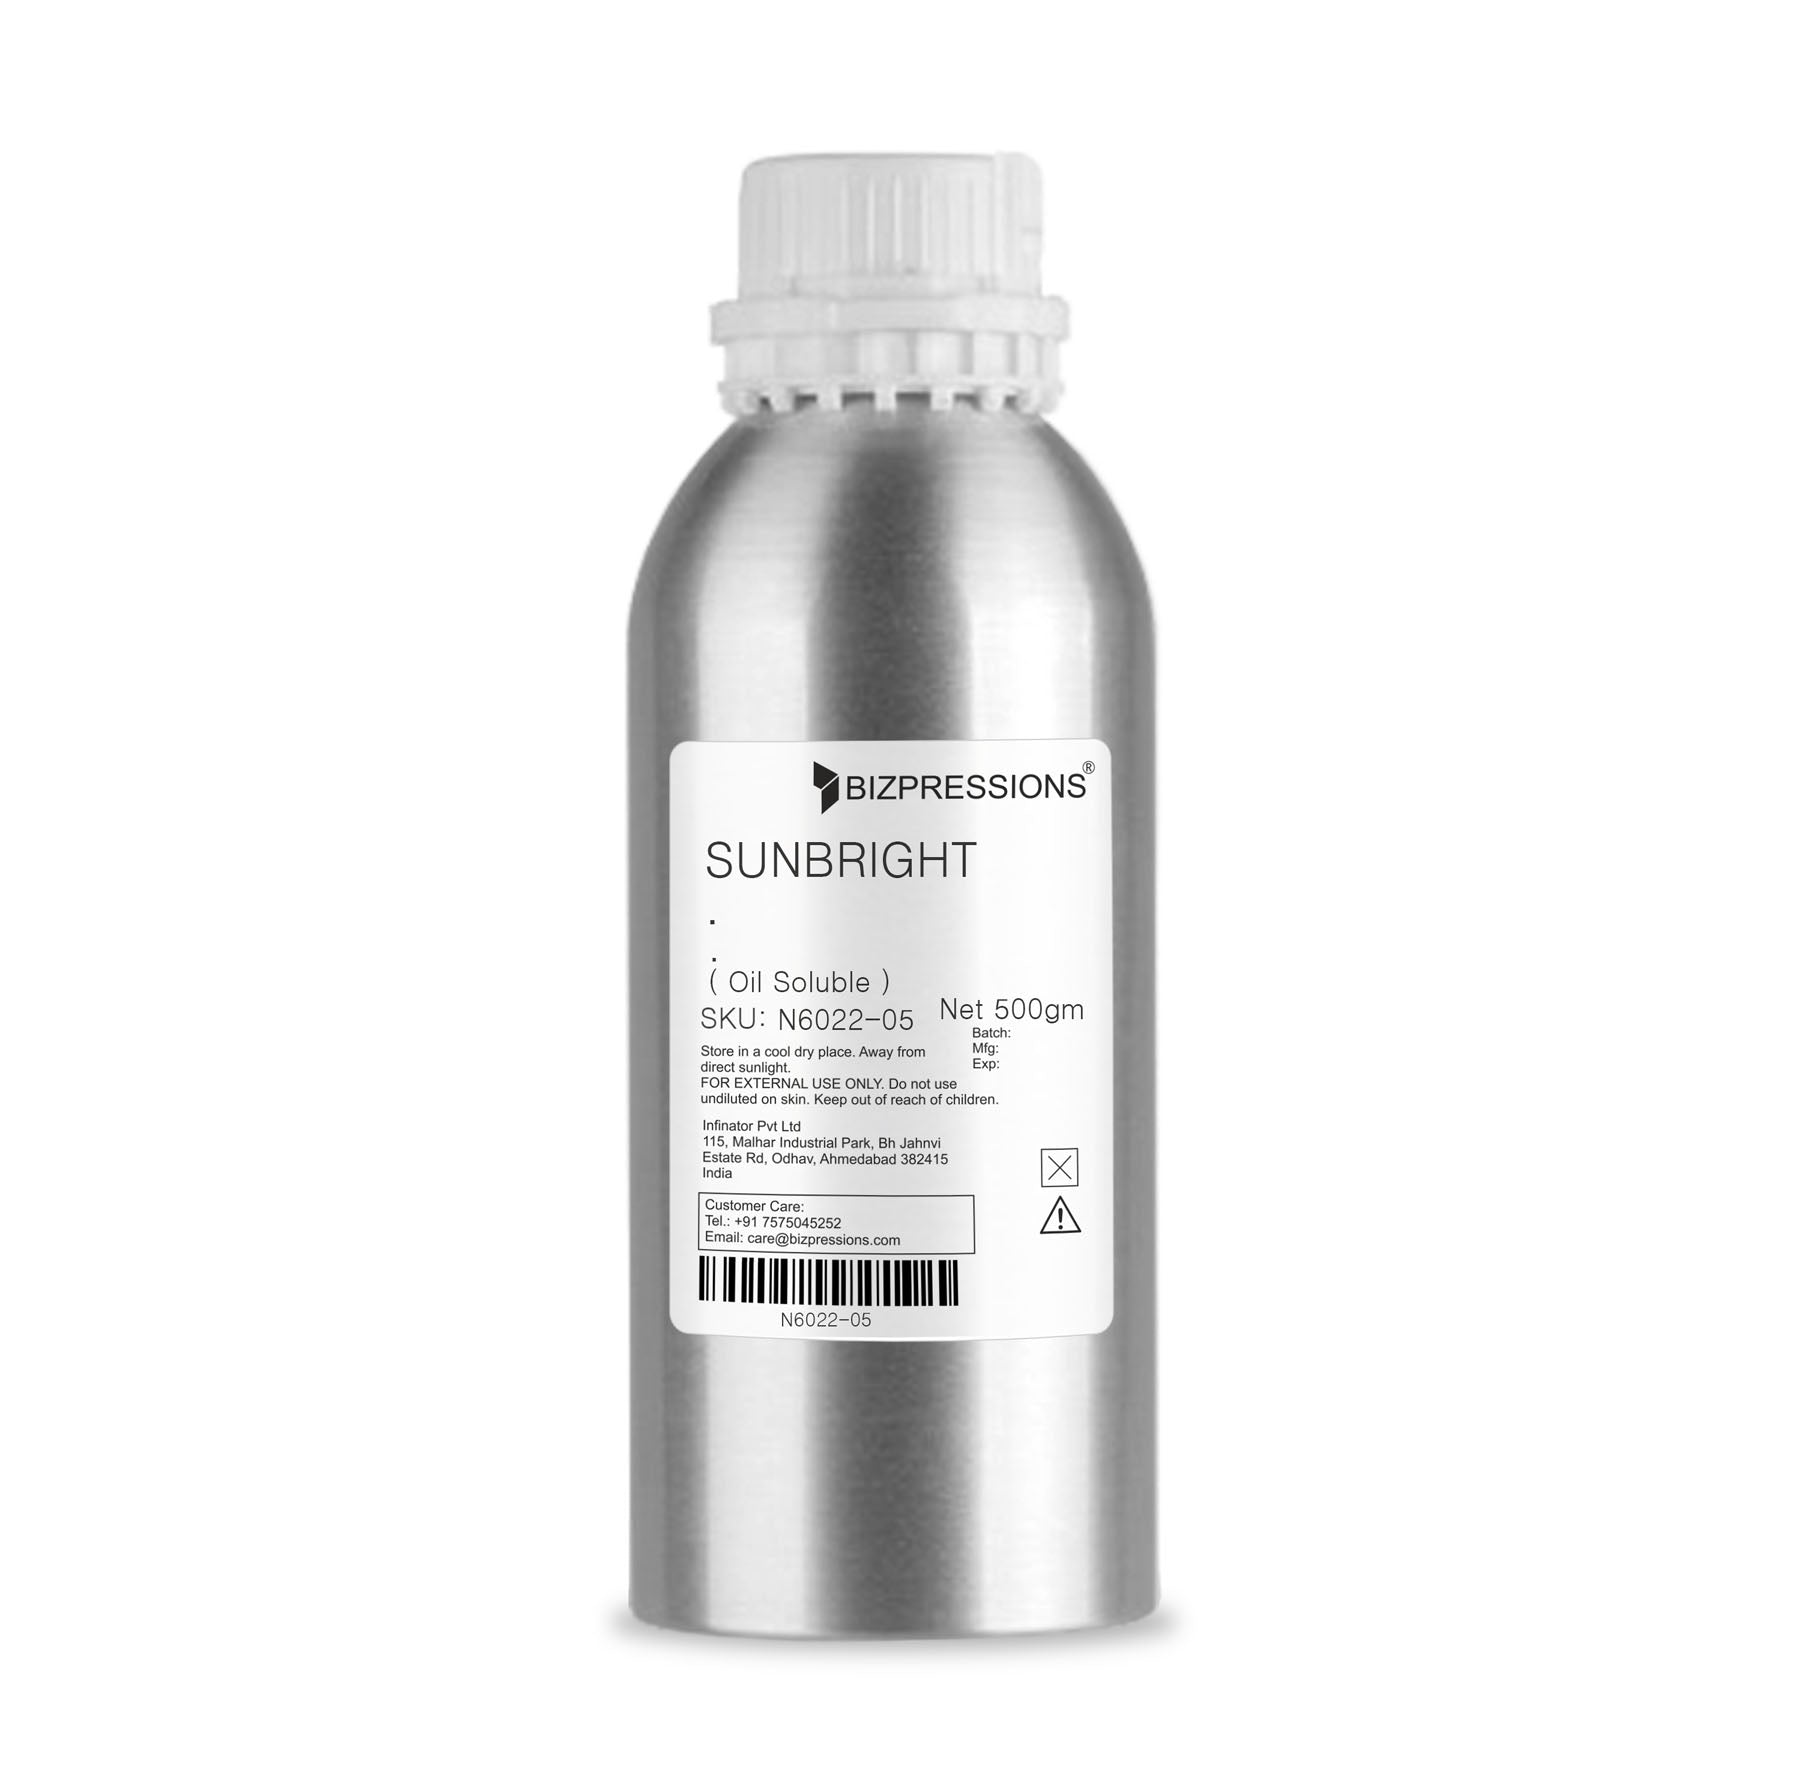 SUNBRIGHT - Fragrance ( Oil Soluble ) - 500 gm